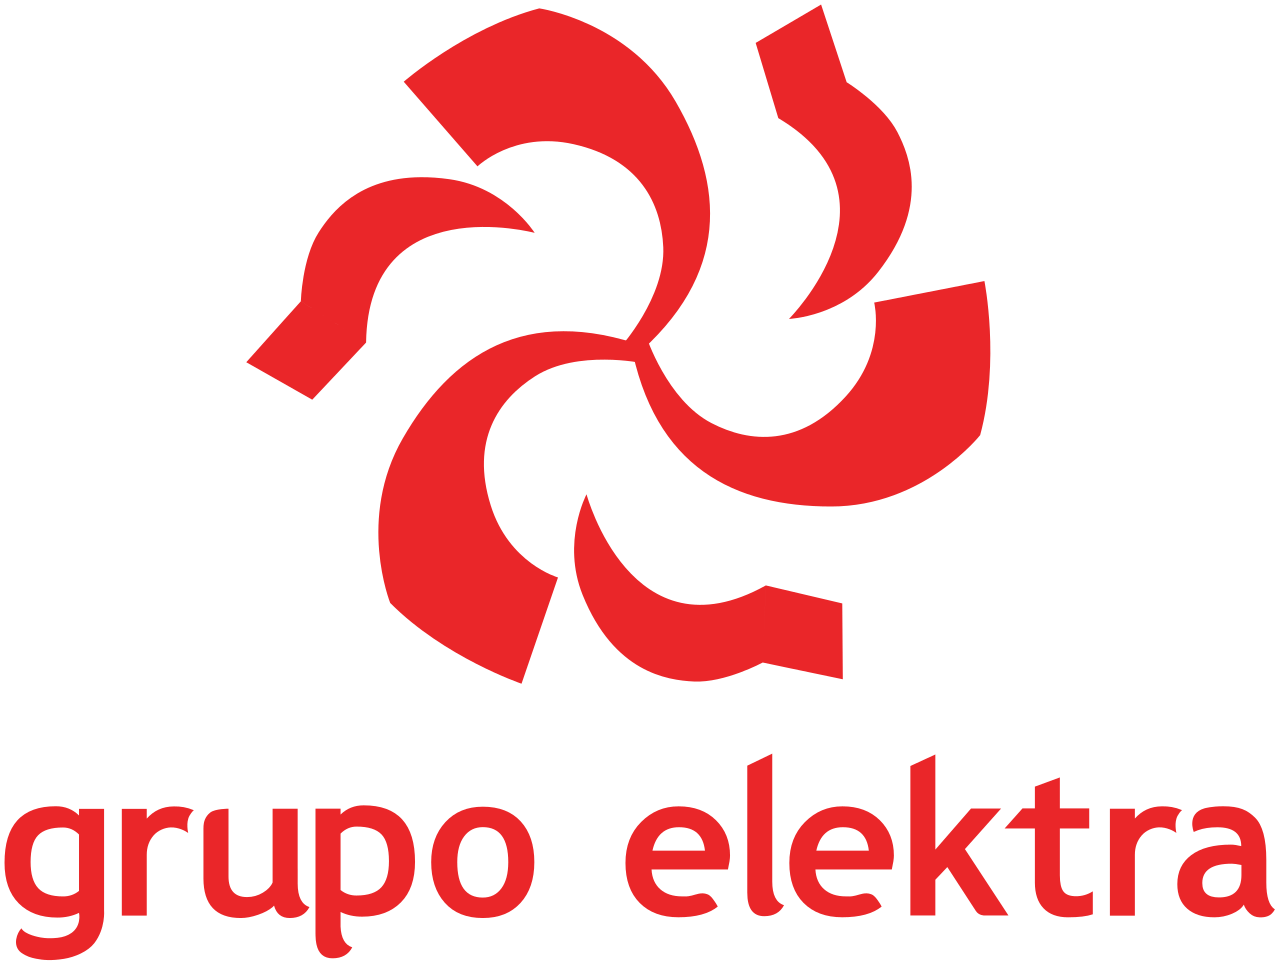 Elektra Logo - Grupo Elektra logo.svg